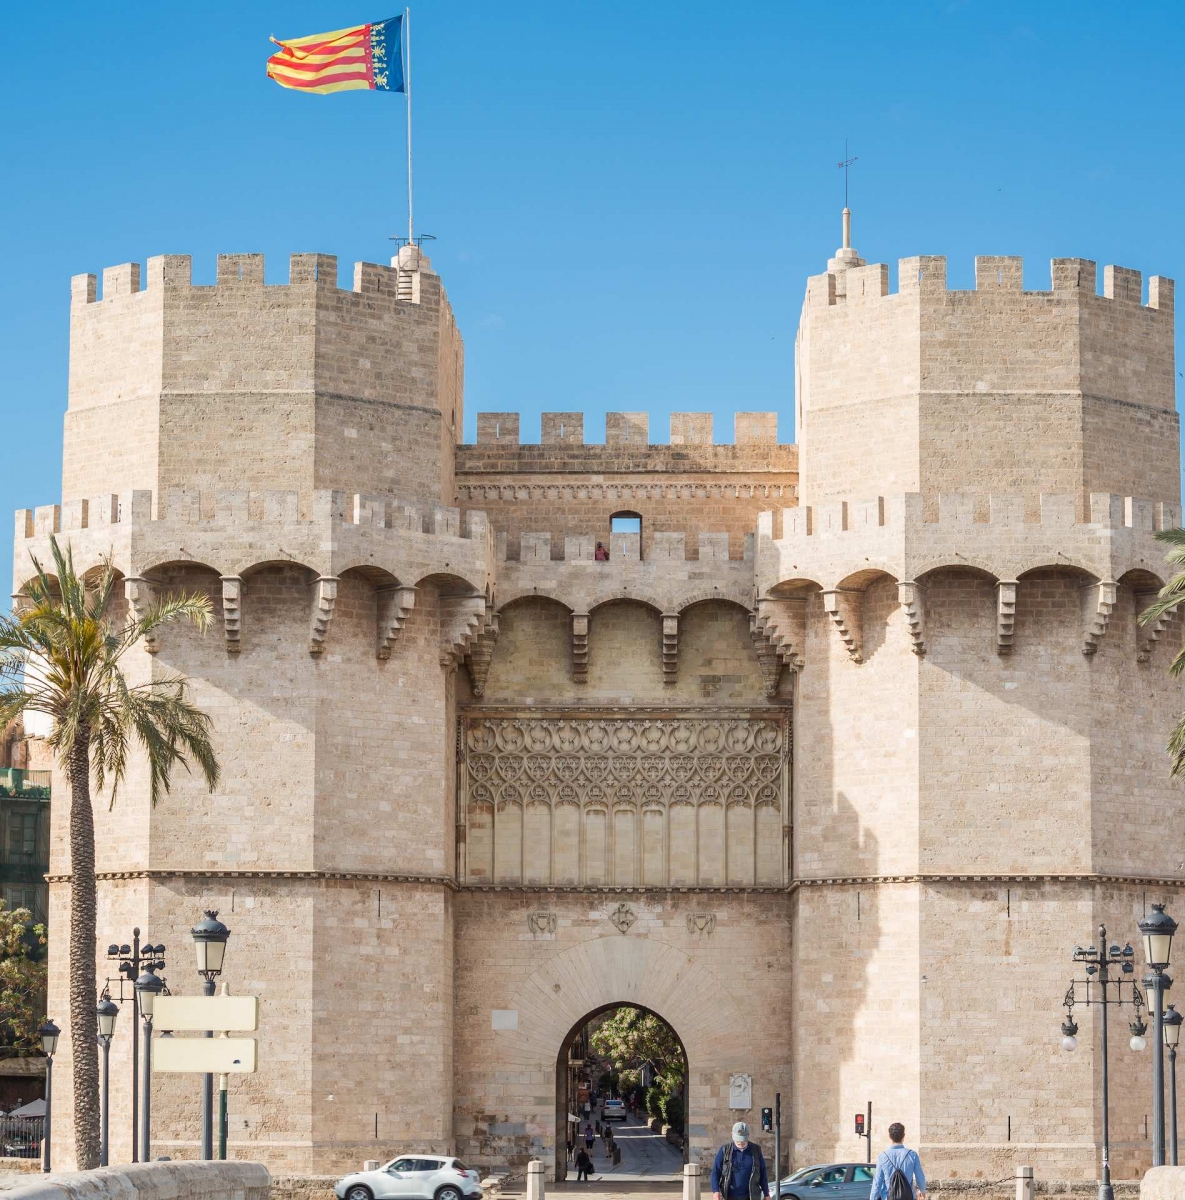 Torre de Serranos gate in Valencia, Spain